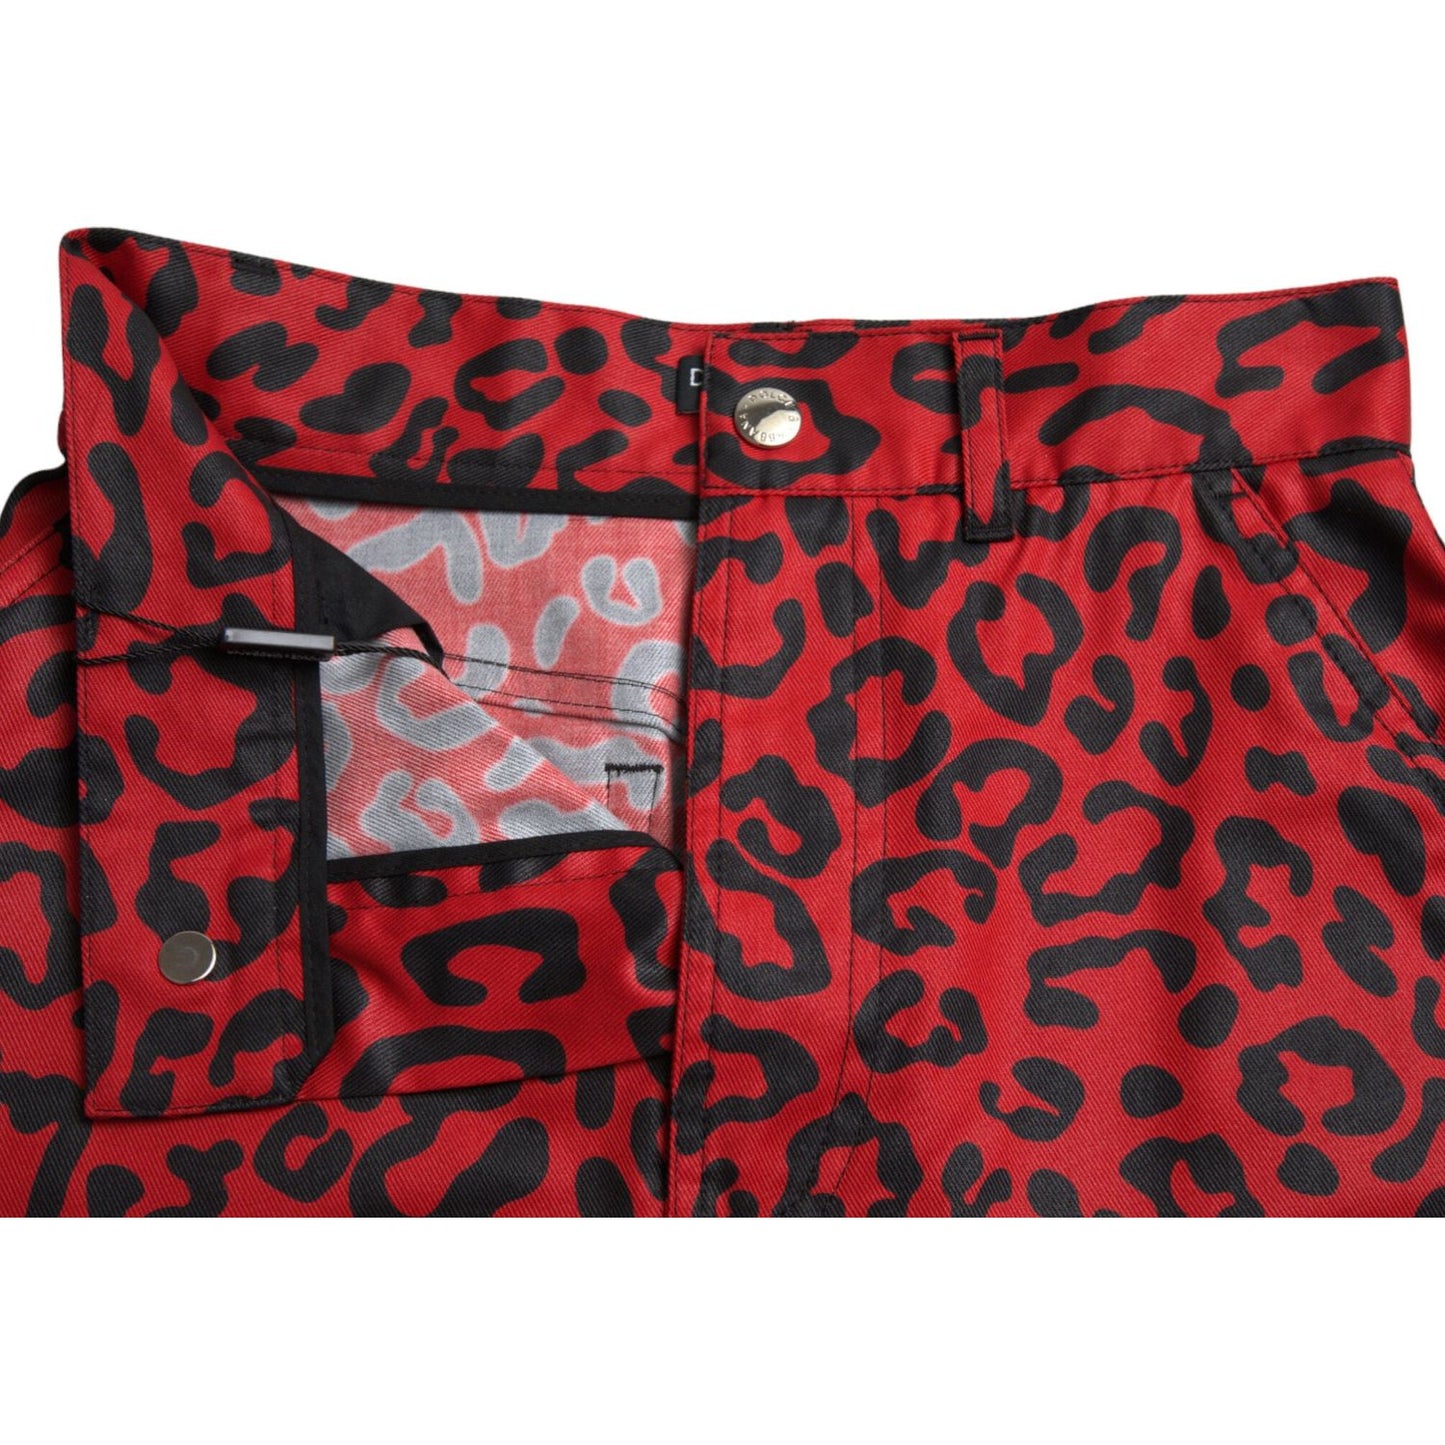 Dolce & Gabbana Red Leopard Print Cotton High Waist Mini Skirt red-leopard-print-cotton-high-waist-mini-skirt 465A1099-BG-scaled-a87e6676-4cb.jpg